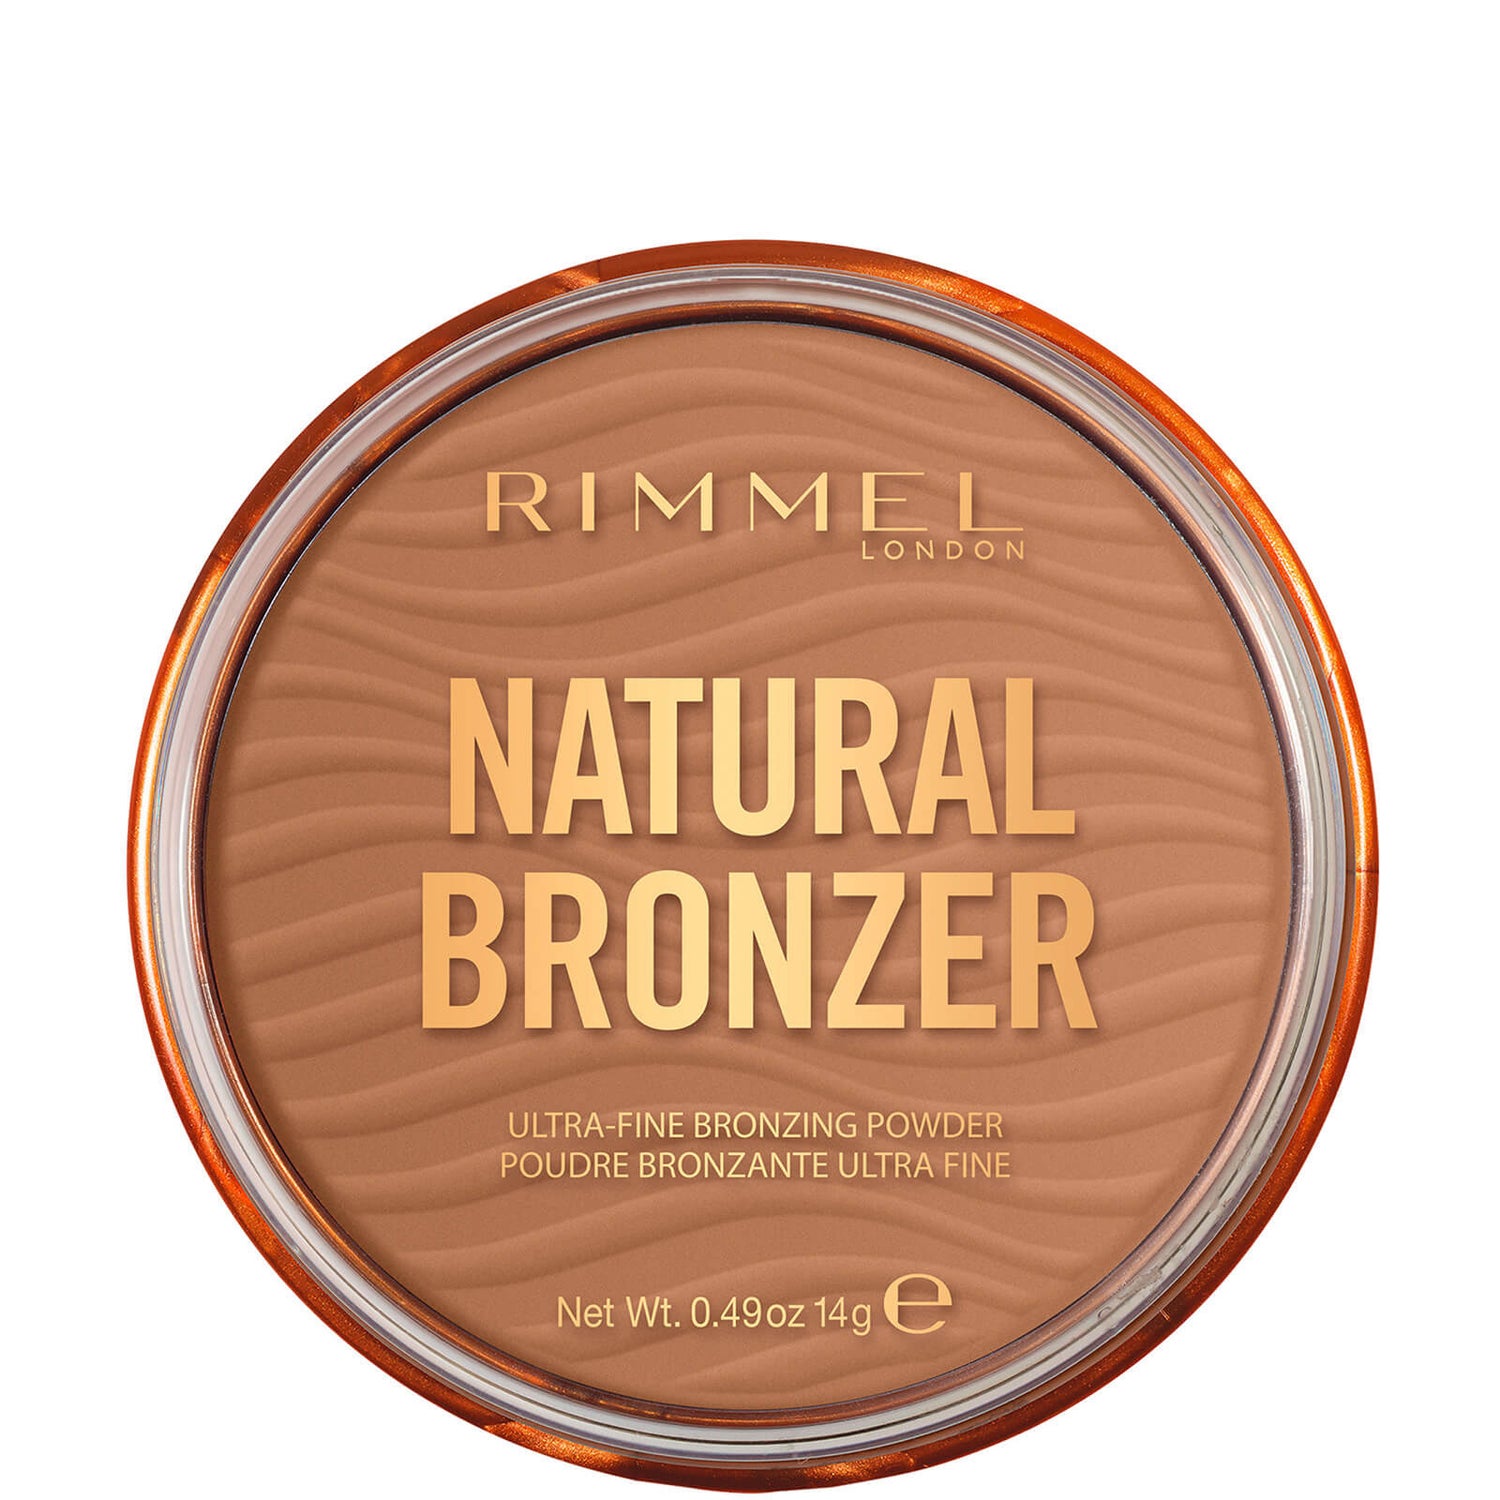 Бронзер Rimmel Natural Bronzer (различные оттенки)